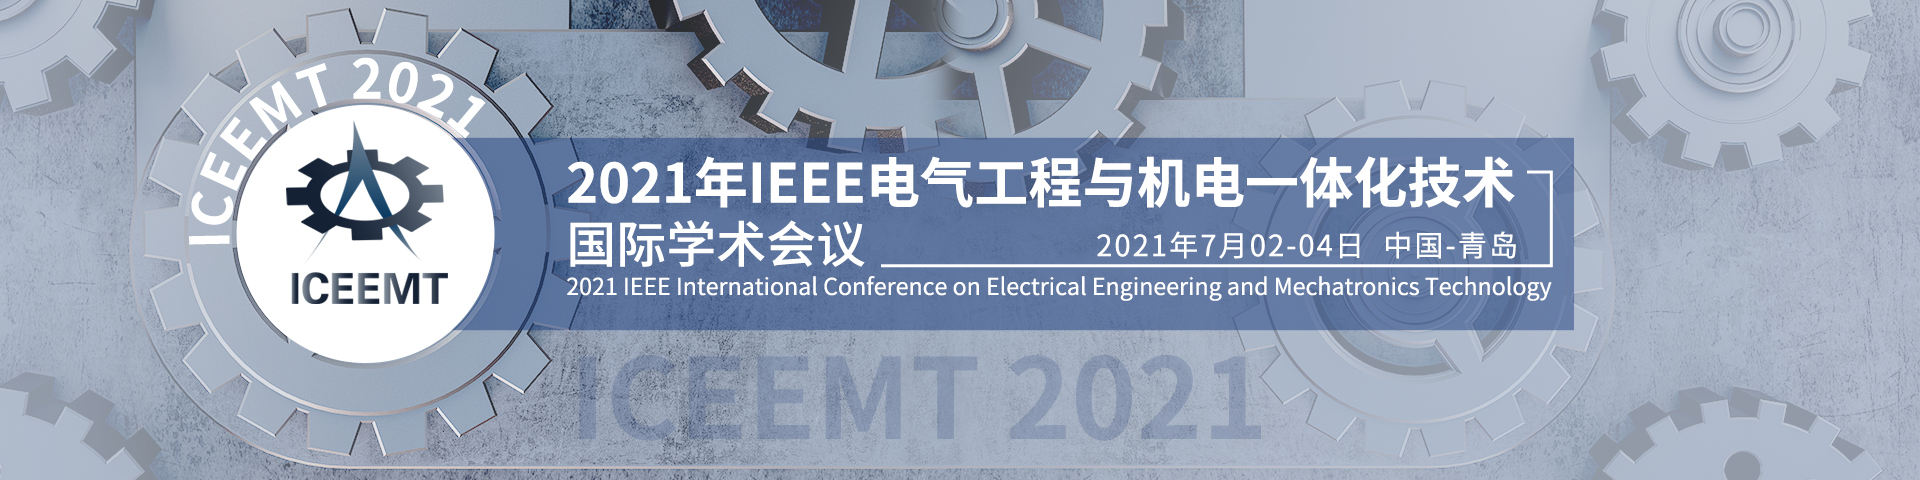 ICEEMT 2021-官网banner中版-何霞丽-1021.jpg